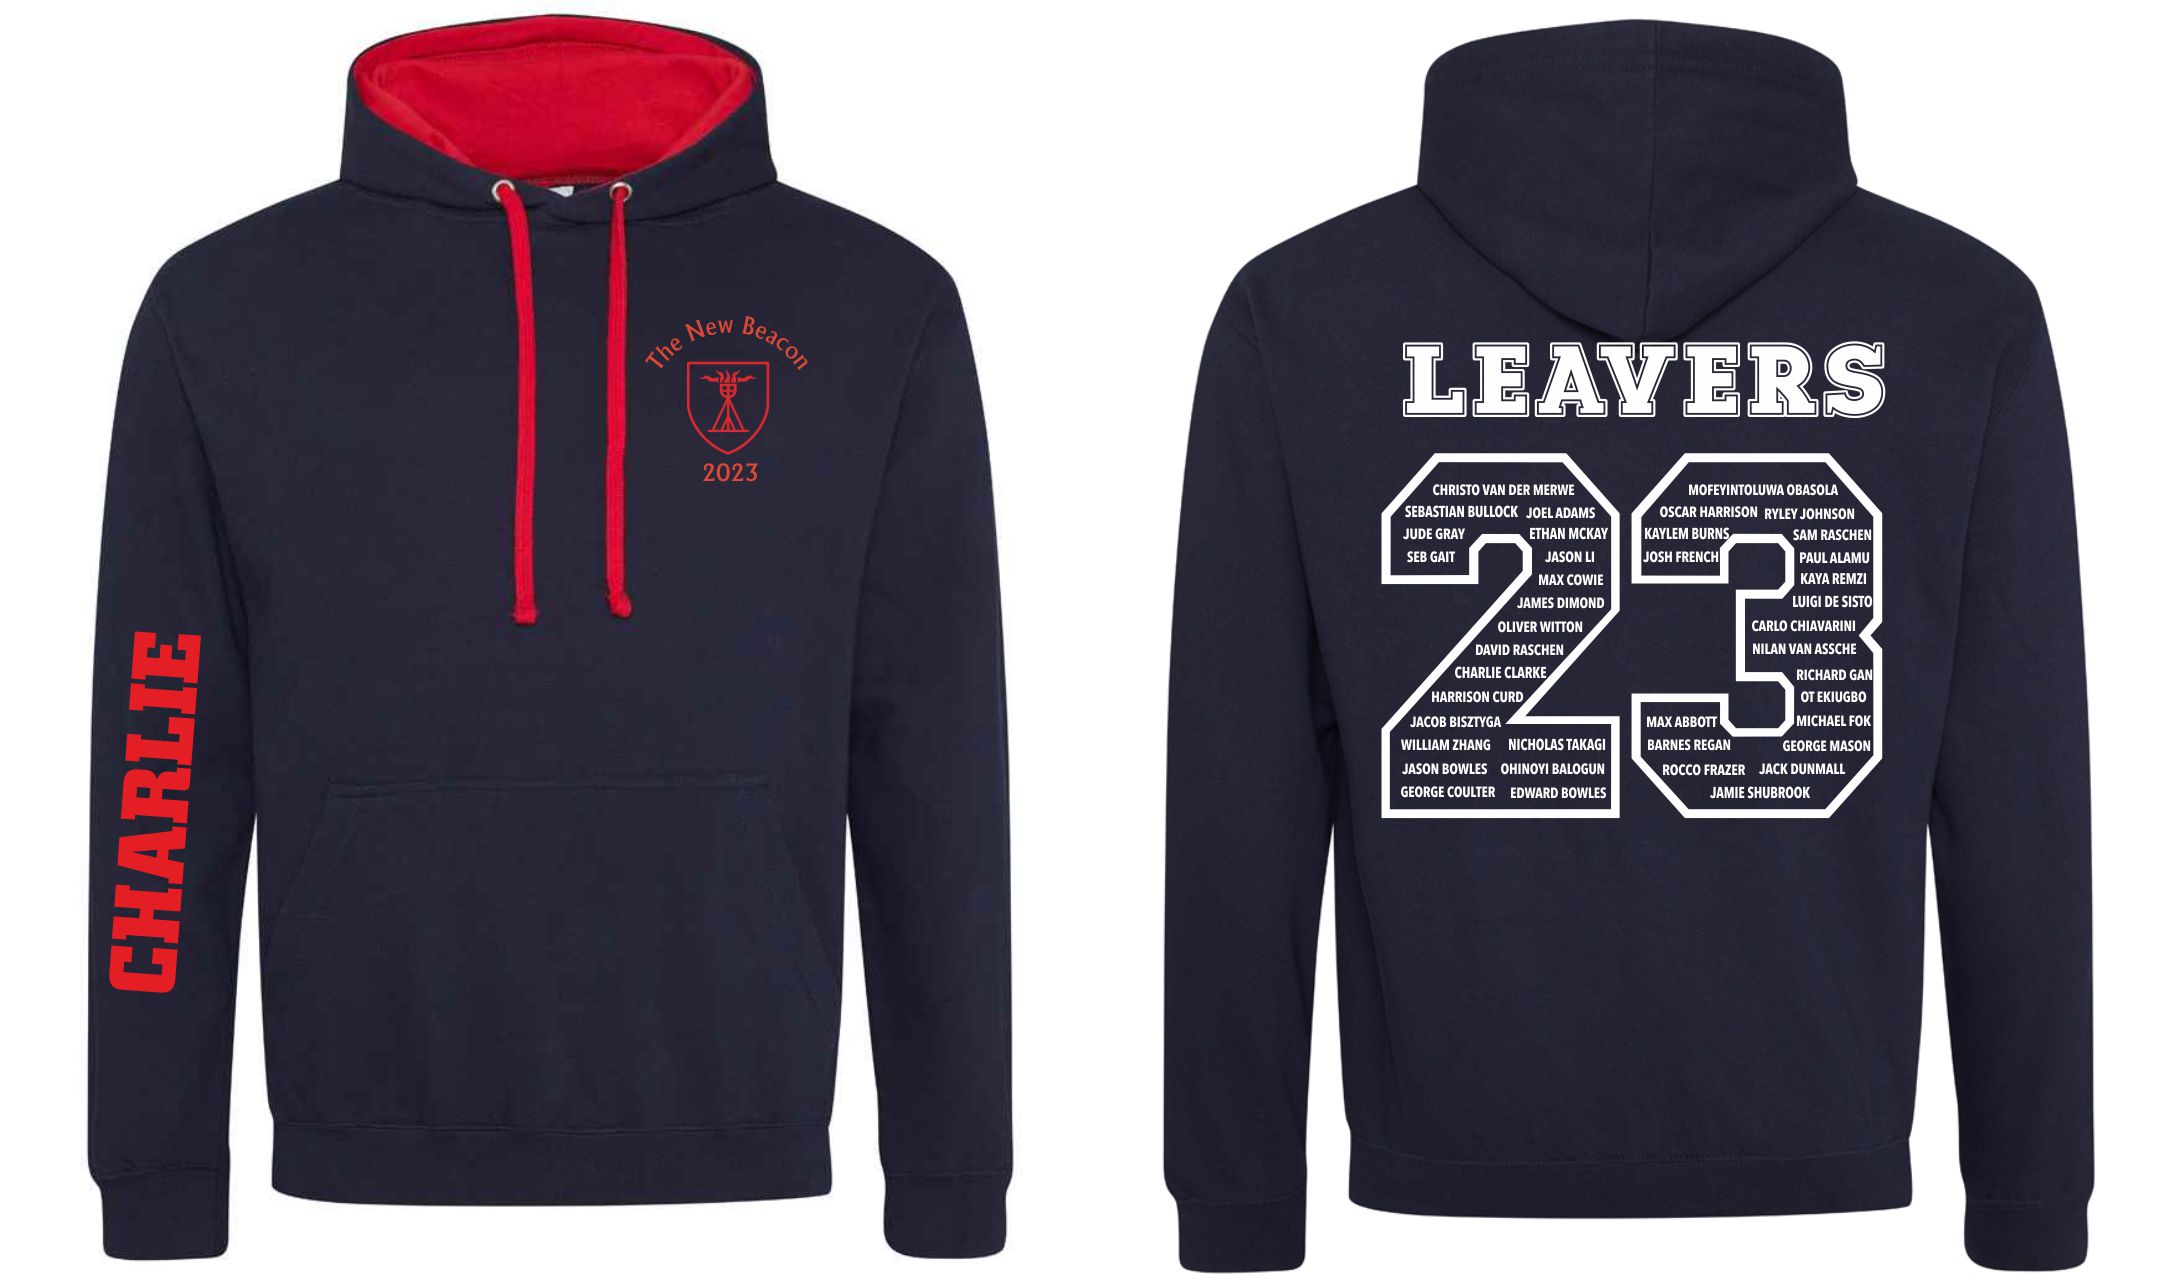 New Beacon YEAR 8 Leavers hoodie Senior Sizes